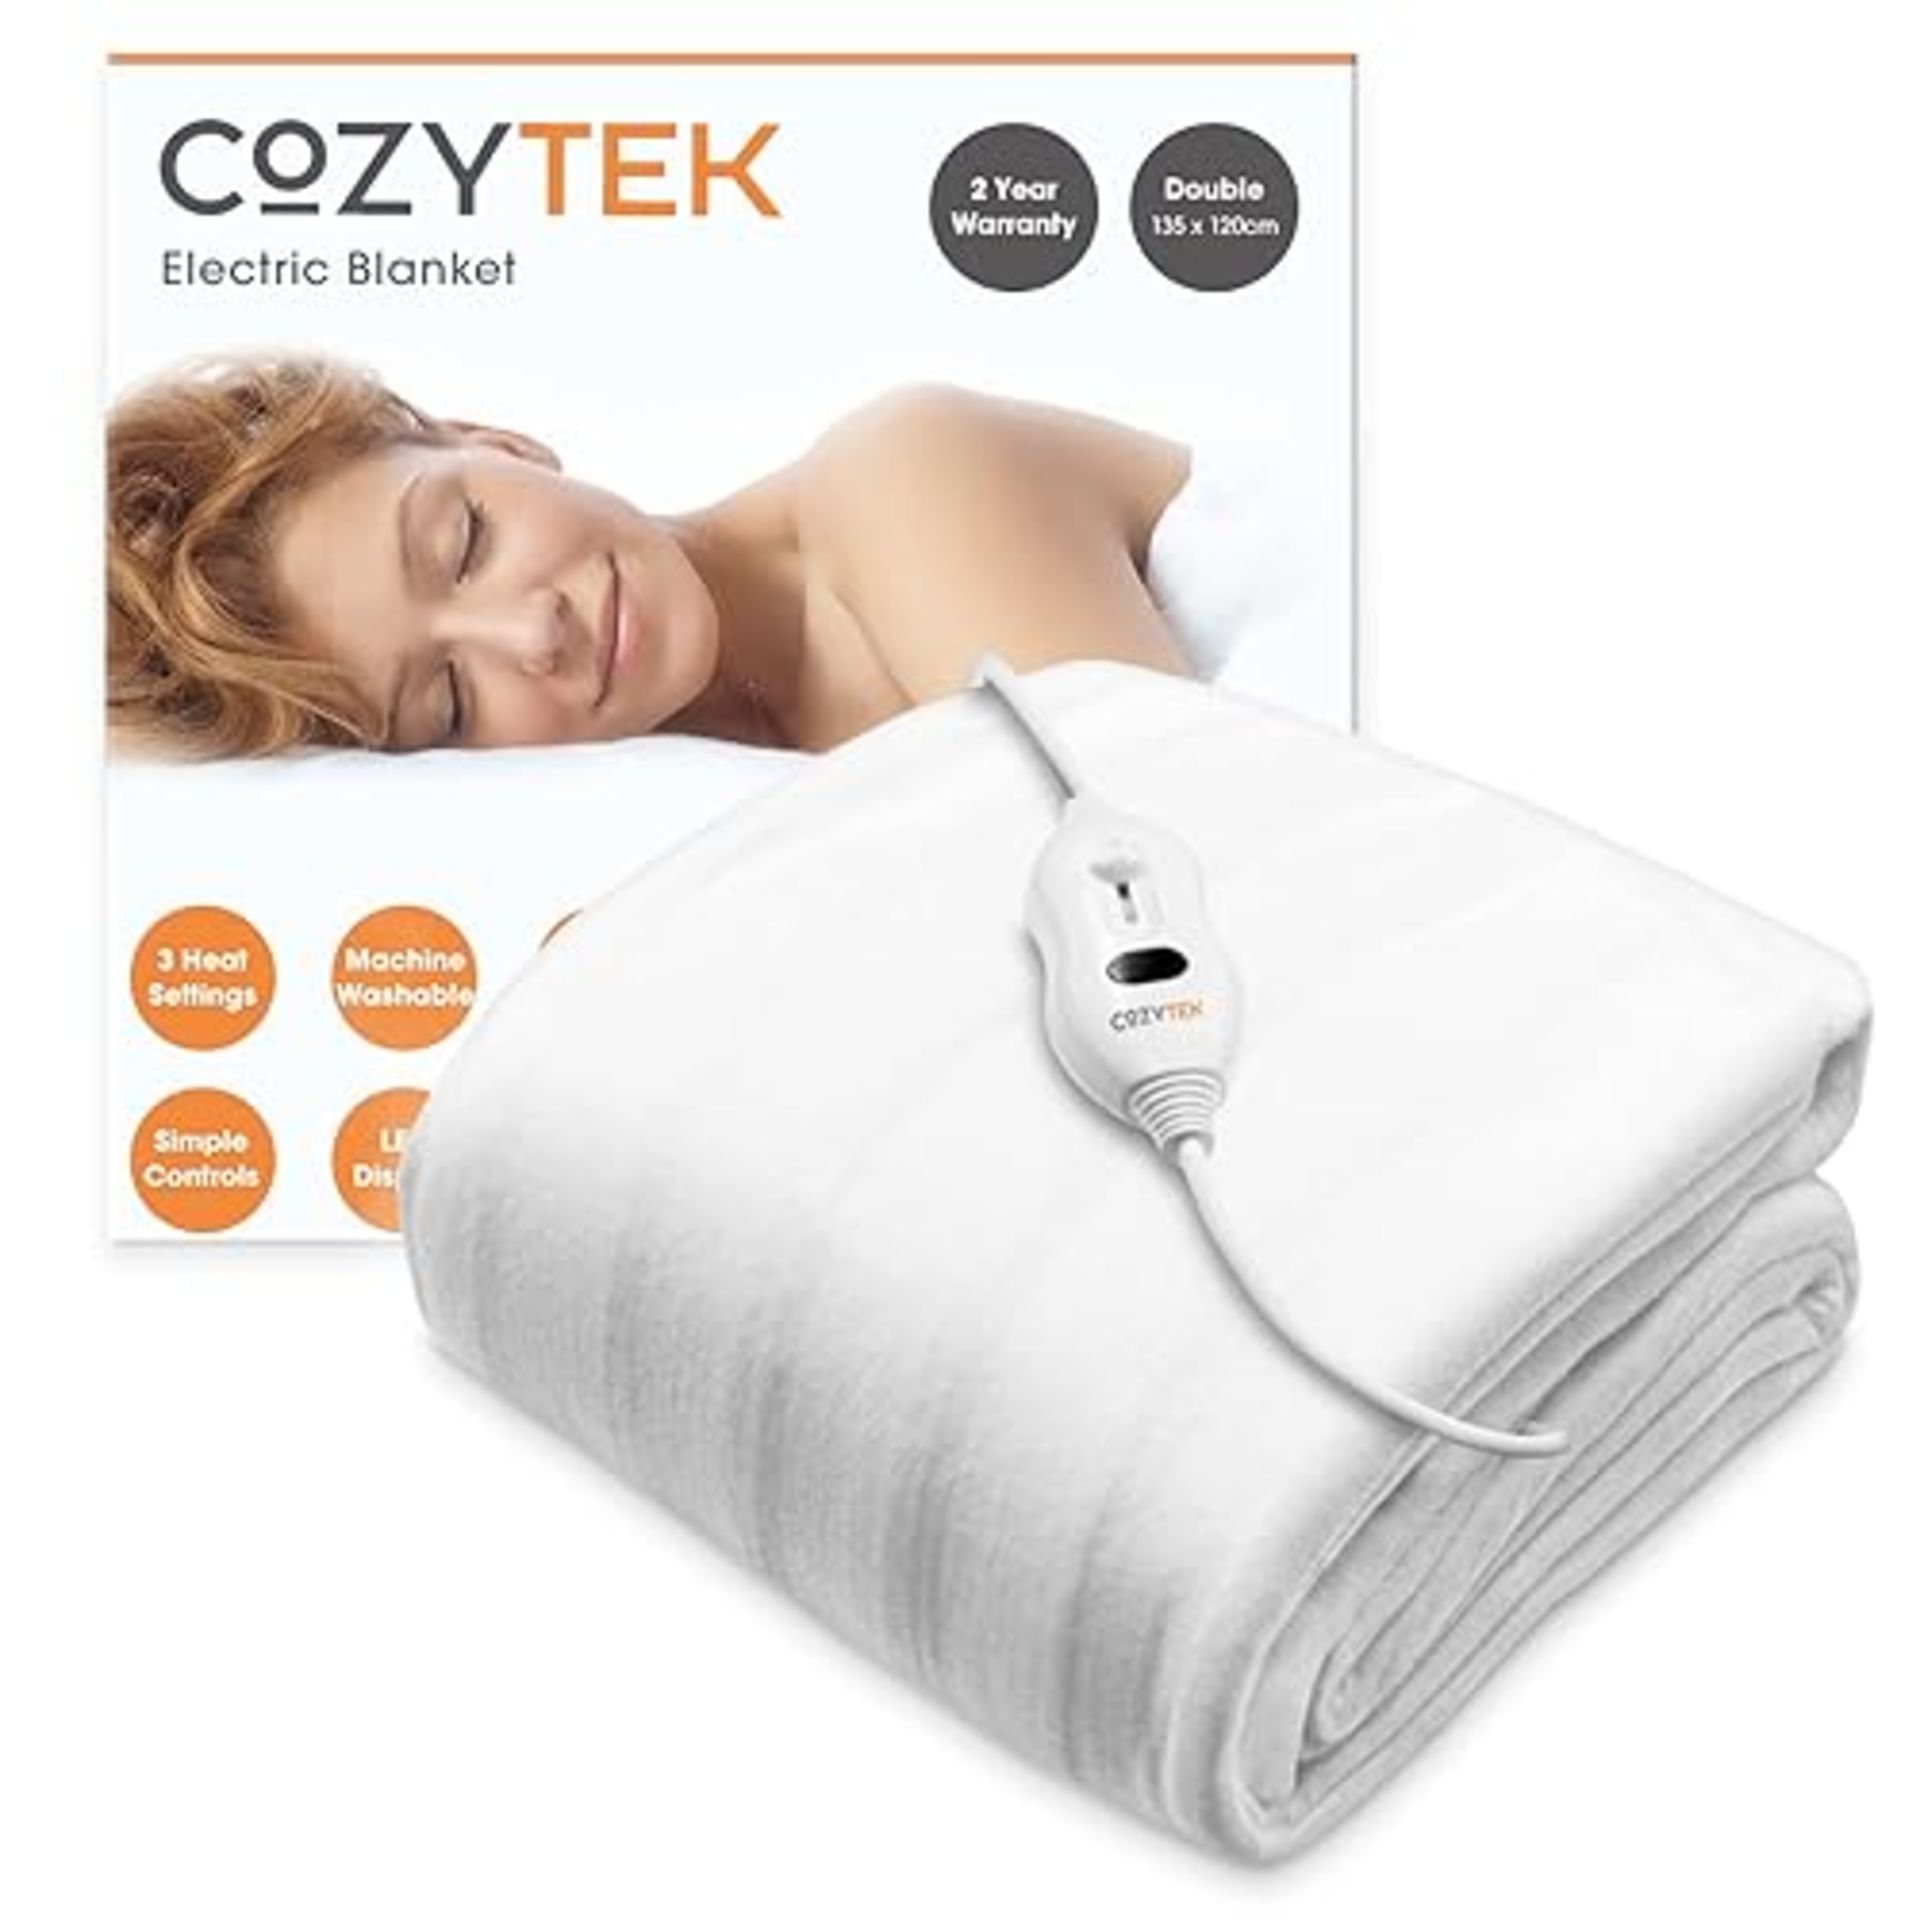 Cozytek Double Polyester Electric Blanket Size Detachable Control Underblanket 3 Heat Settings Wh...